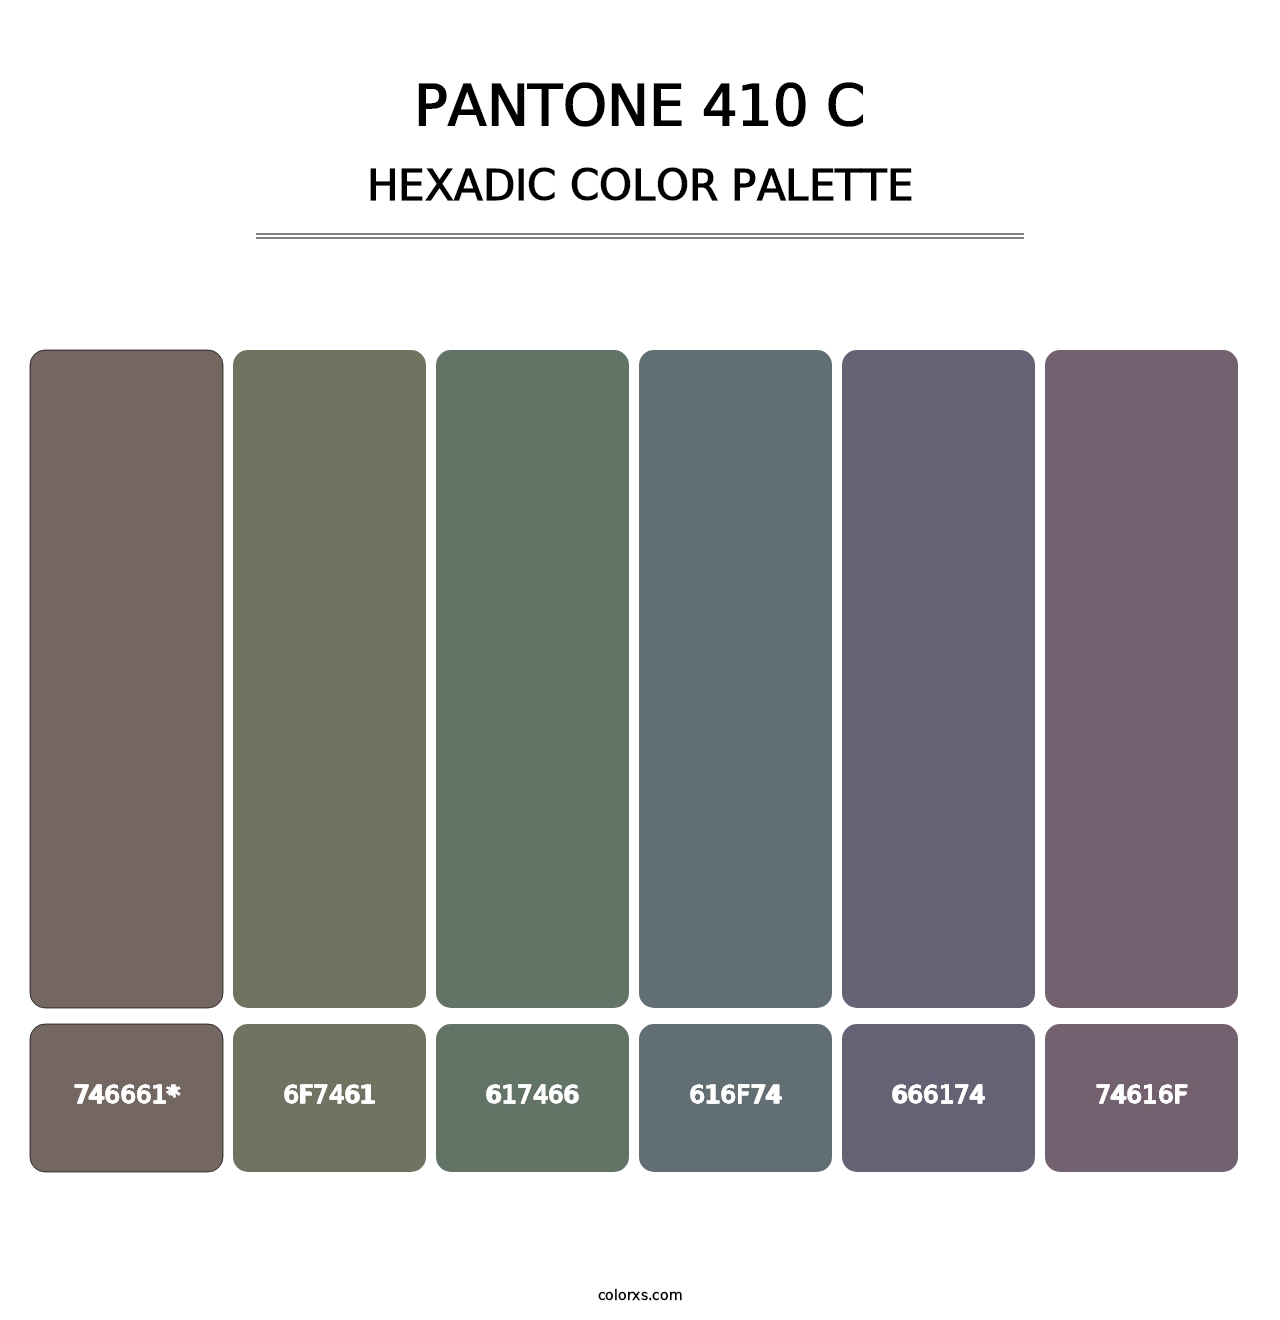 PANTONE 410 C - Hexadic Color Palette